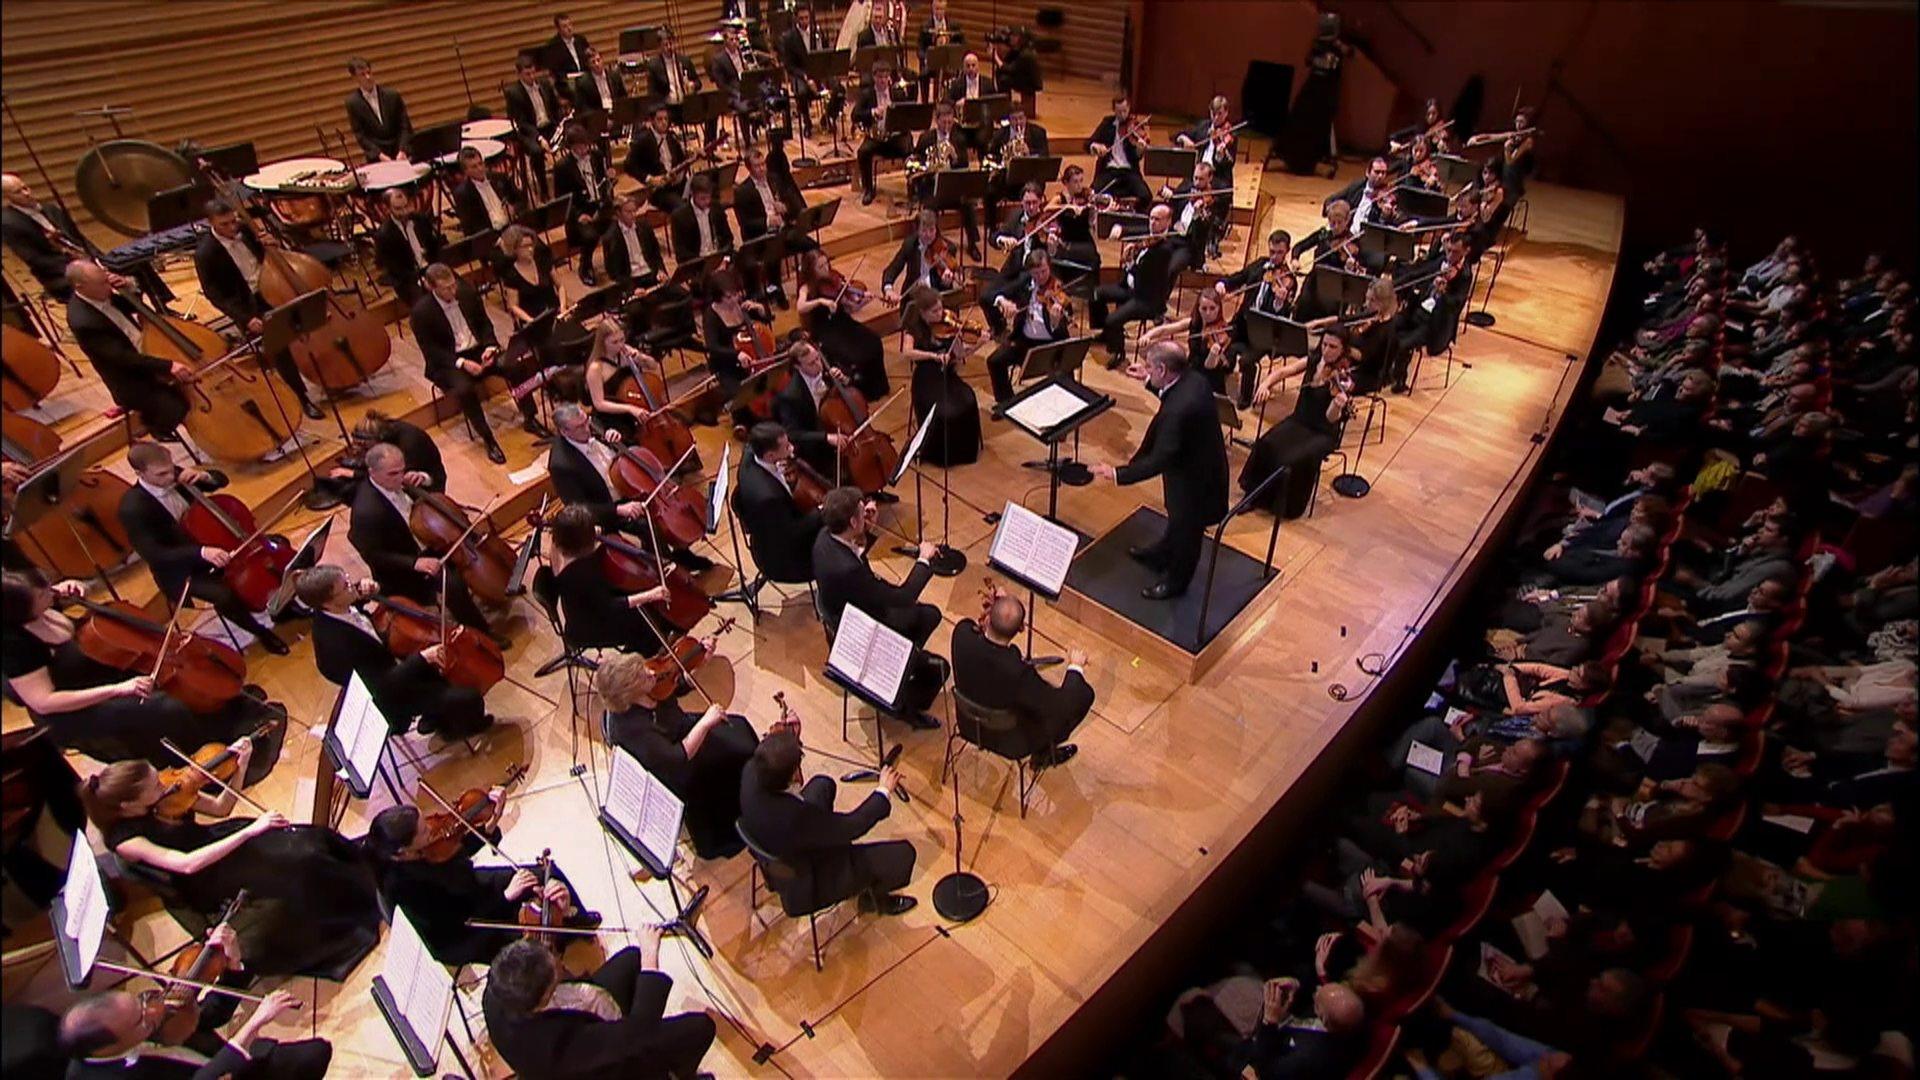 Концертный зал в париже. Концертный зал Плейель в Париже. Shostakovich Gergiev 4. Внутренний концертного зала Плейель в Париже фото. Карери симфония.